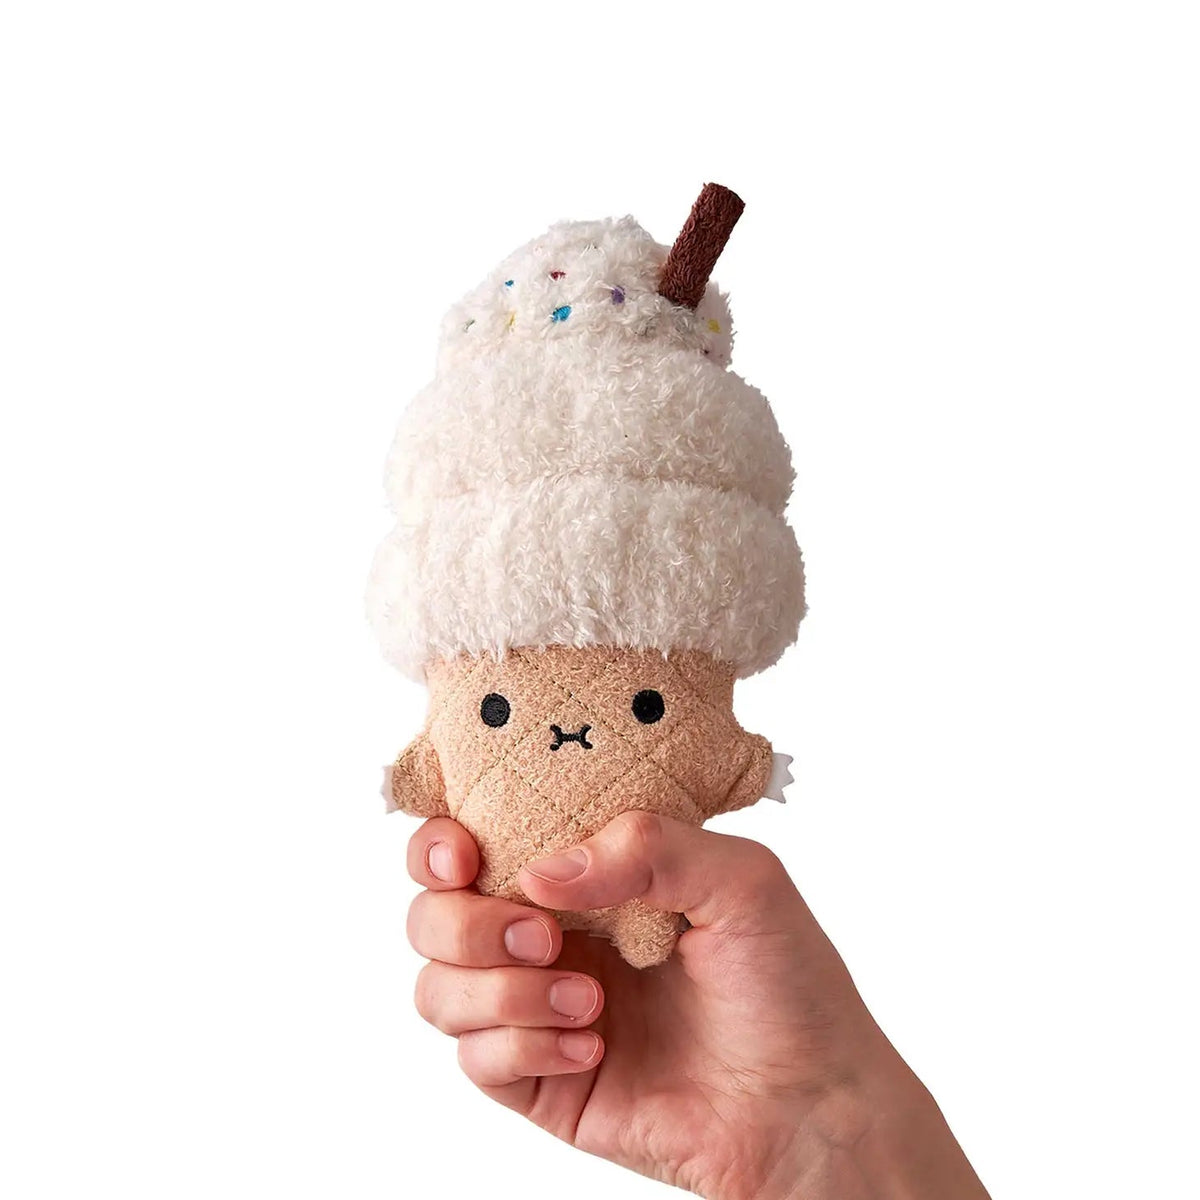 Mini Plush Toy | Ricecream Vanilla by Noodoll - Maude Kids Decor